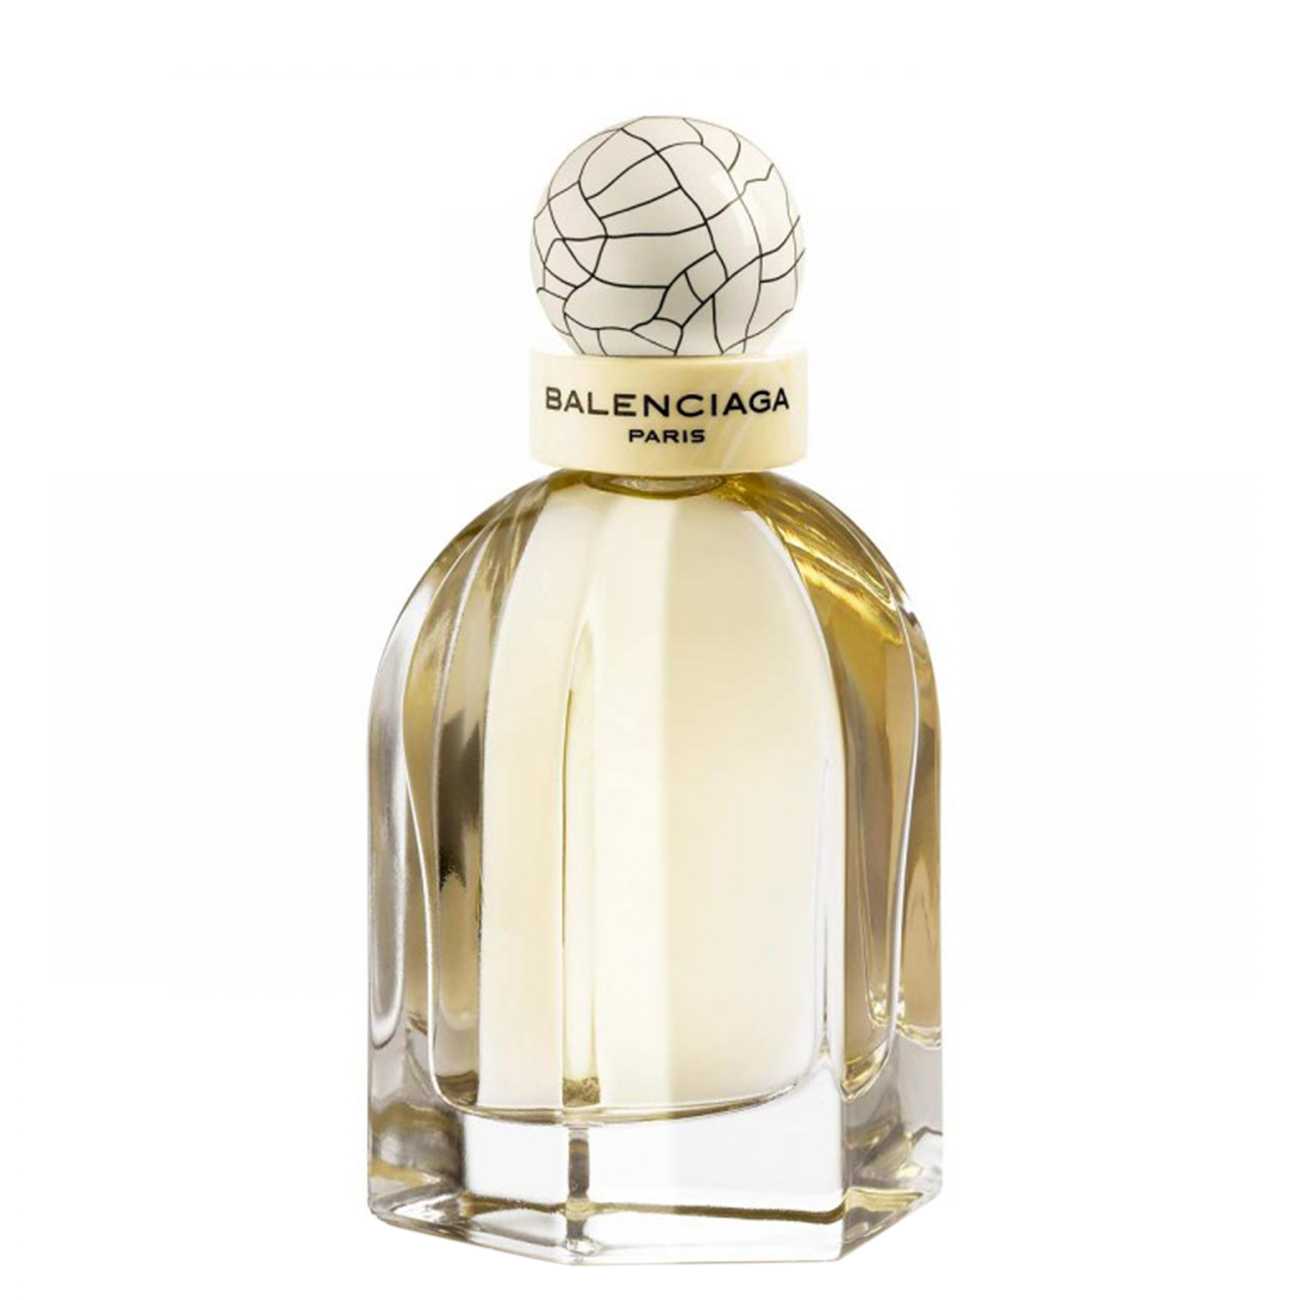 Apa de Parfum Balenciaga PARIS,10 AVENUE GEORGE V 75 ML 75ml cu comanda online